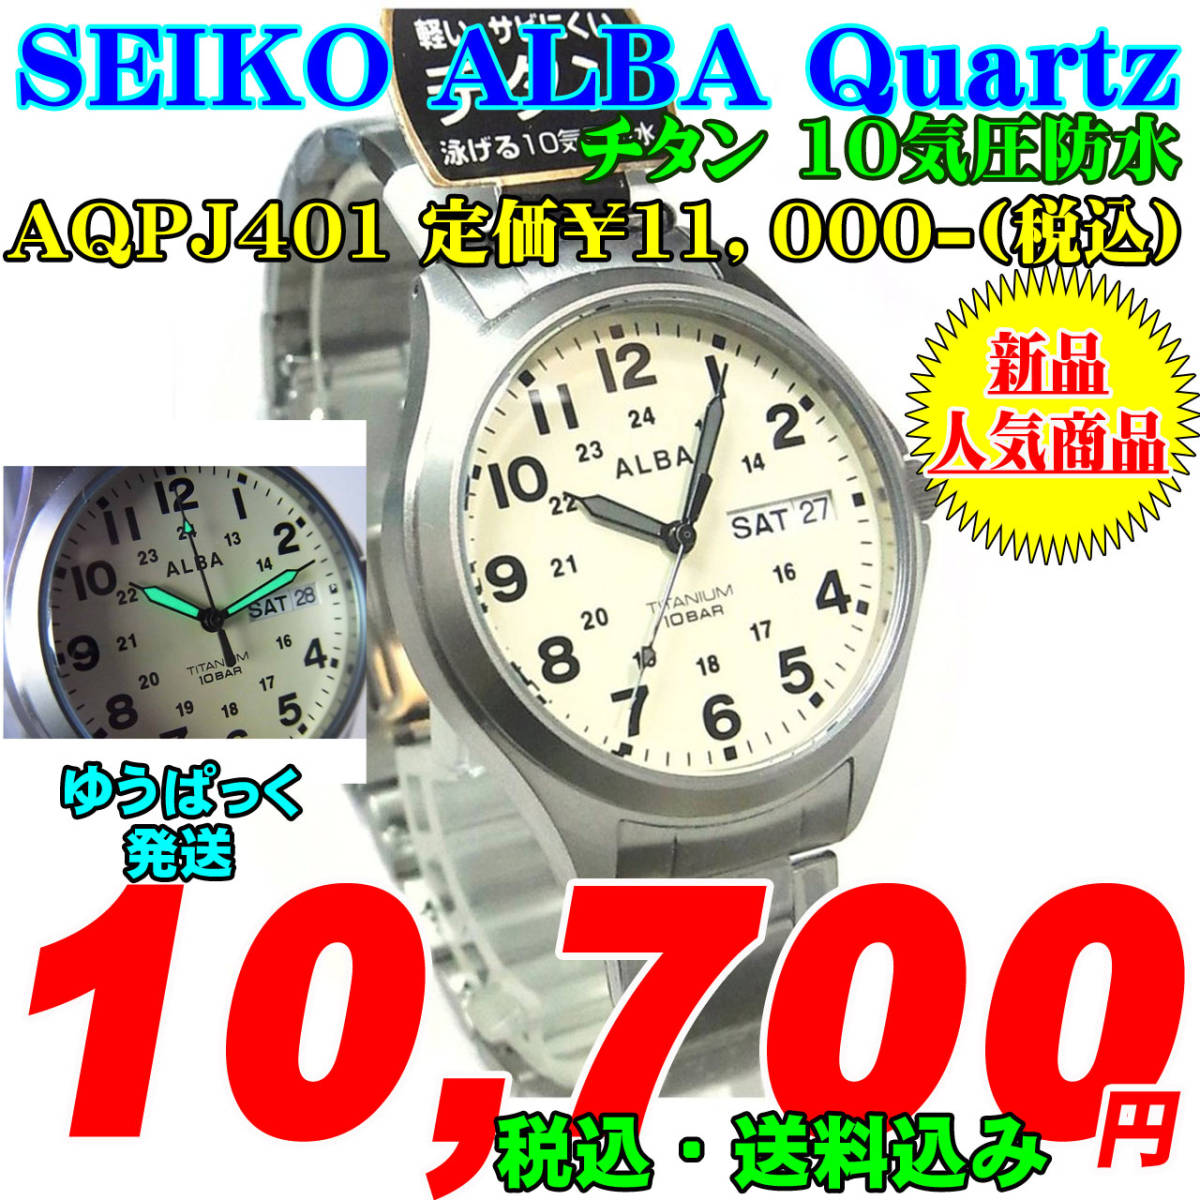 SEIKO セイコー ALBA アルバ MEN'S 紳士 Quartz クォーツ チタン AQPJ401 定価￥11,000-(税込) 新品です。